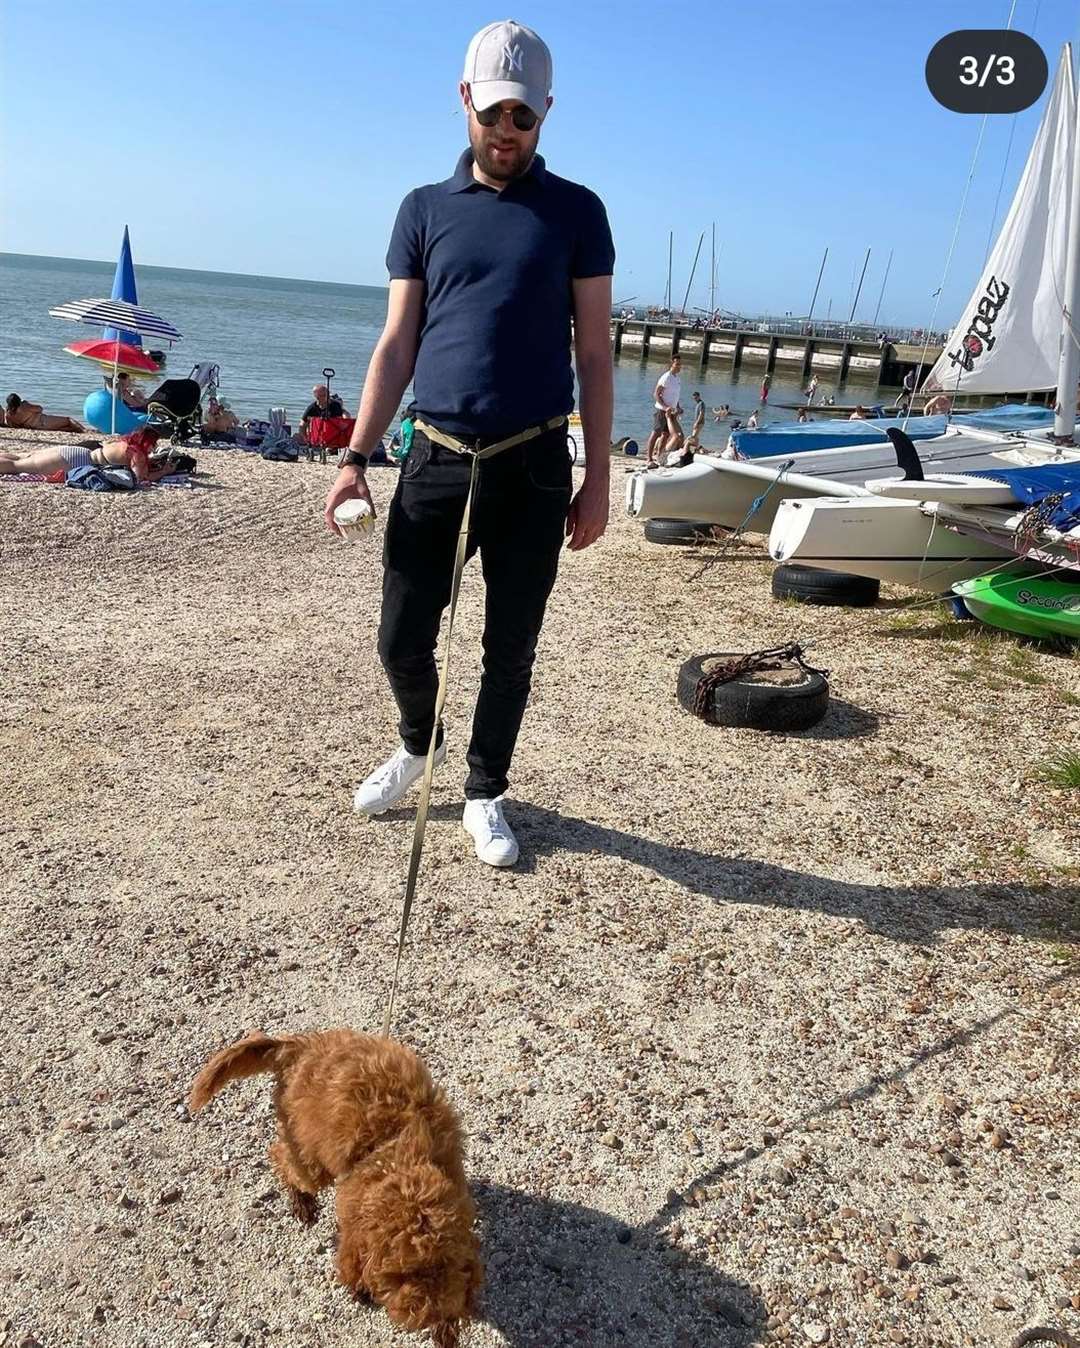 Jack Whitehall enjoying the sun at Whitstable beach. Picture: Instagram / jackwhitehall